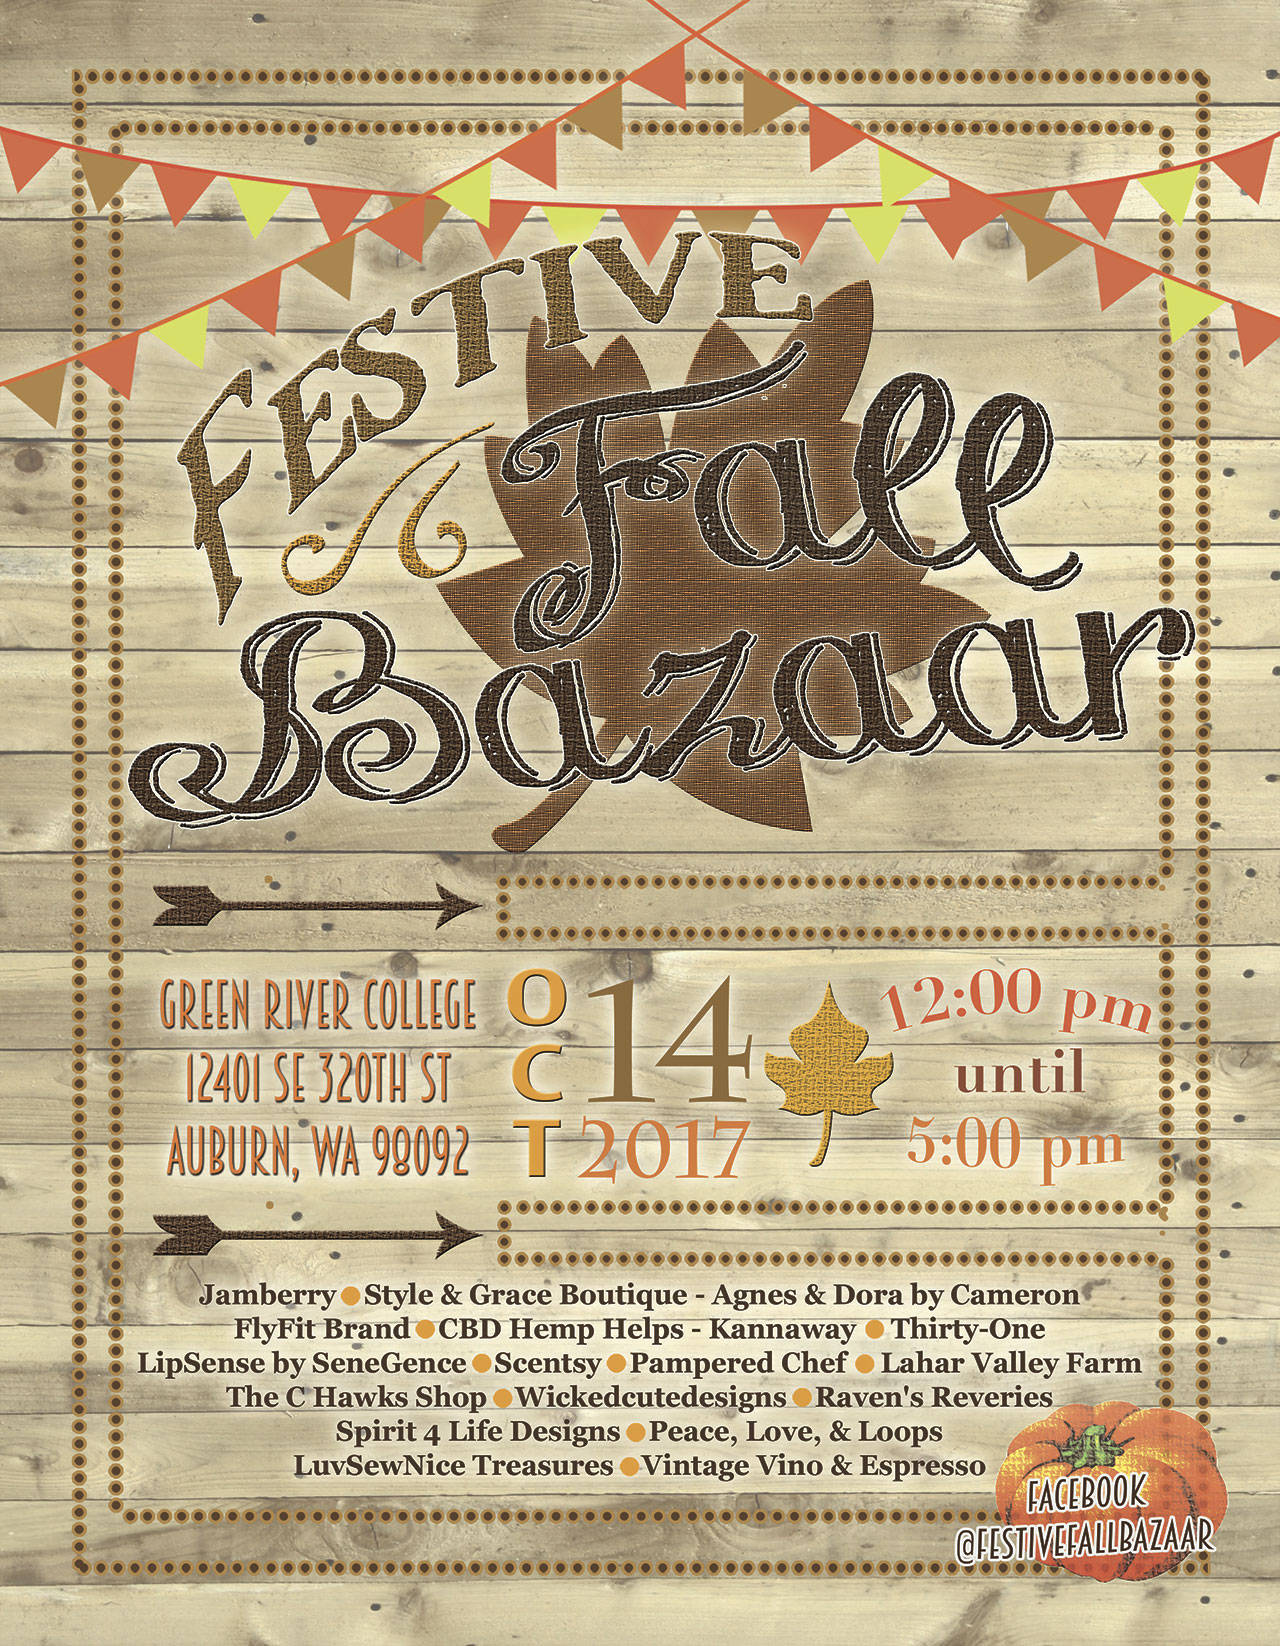 Green River College hosts Festive Fall Bazaar on Oct. 14